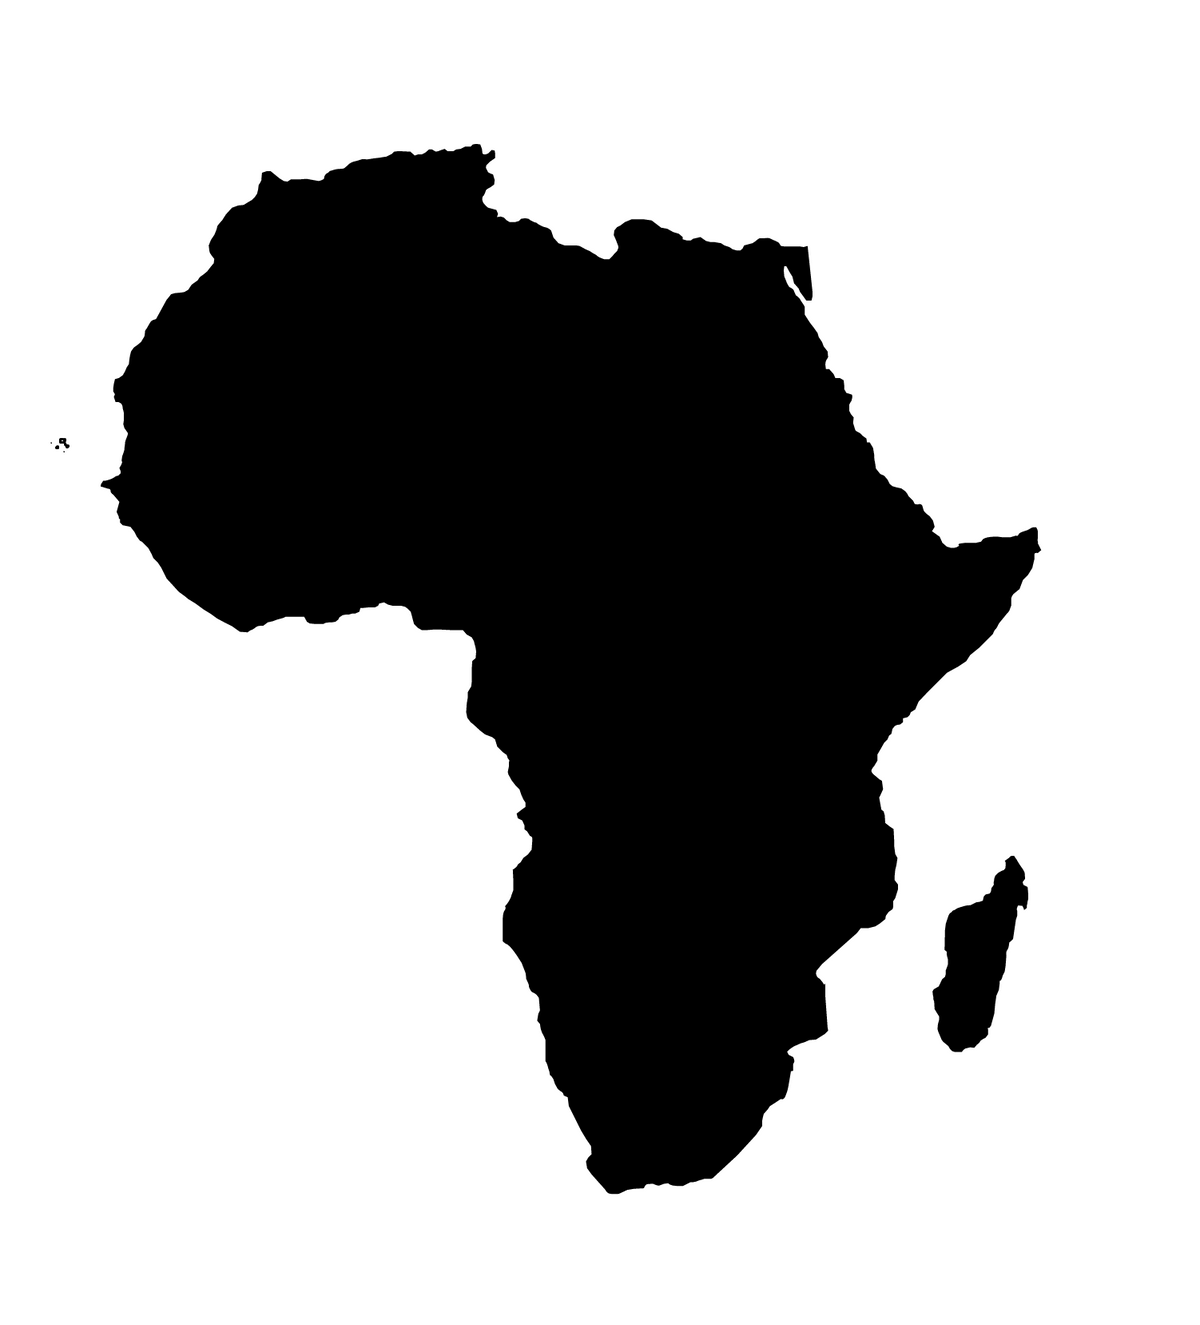 The Media's (mis)Representation of Africa